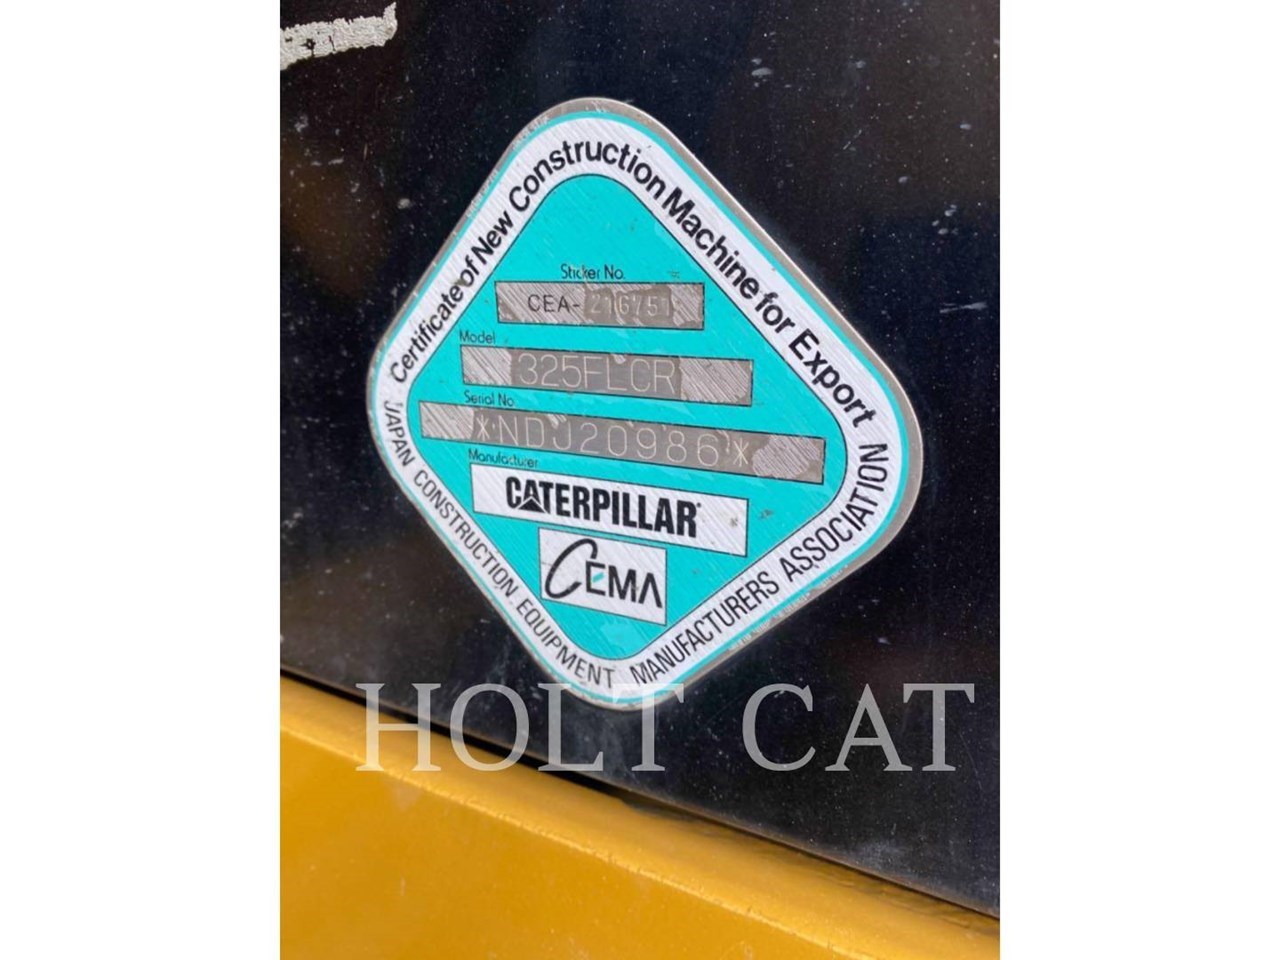 2019 Caterpillar 325FL CRX Image 5